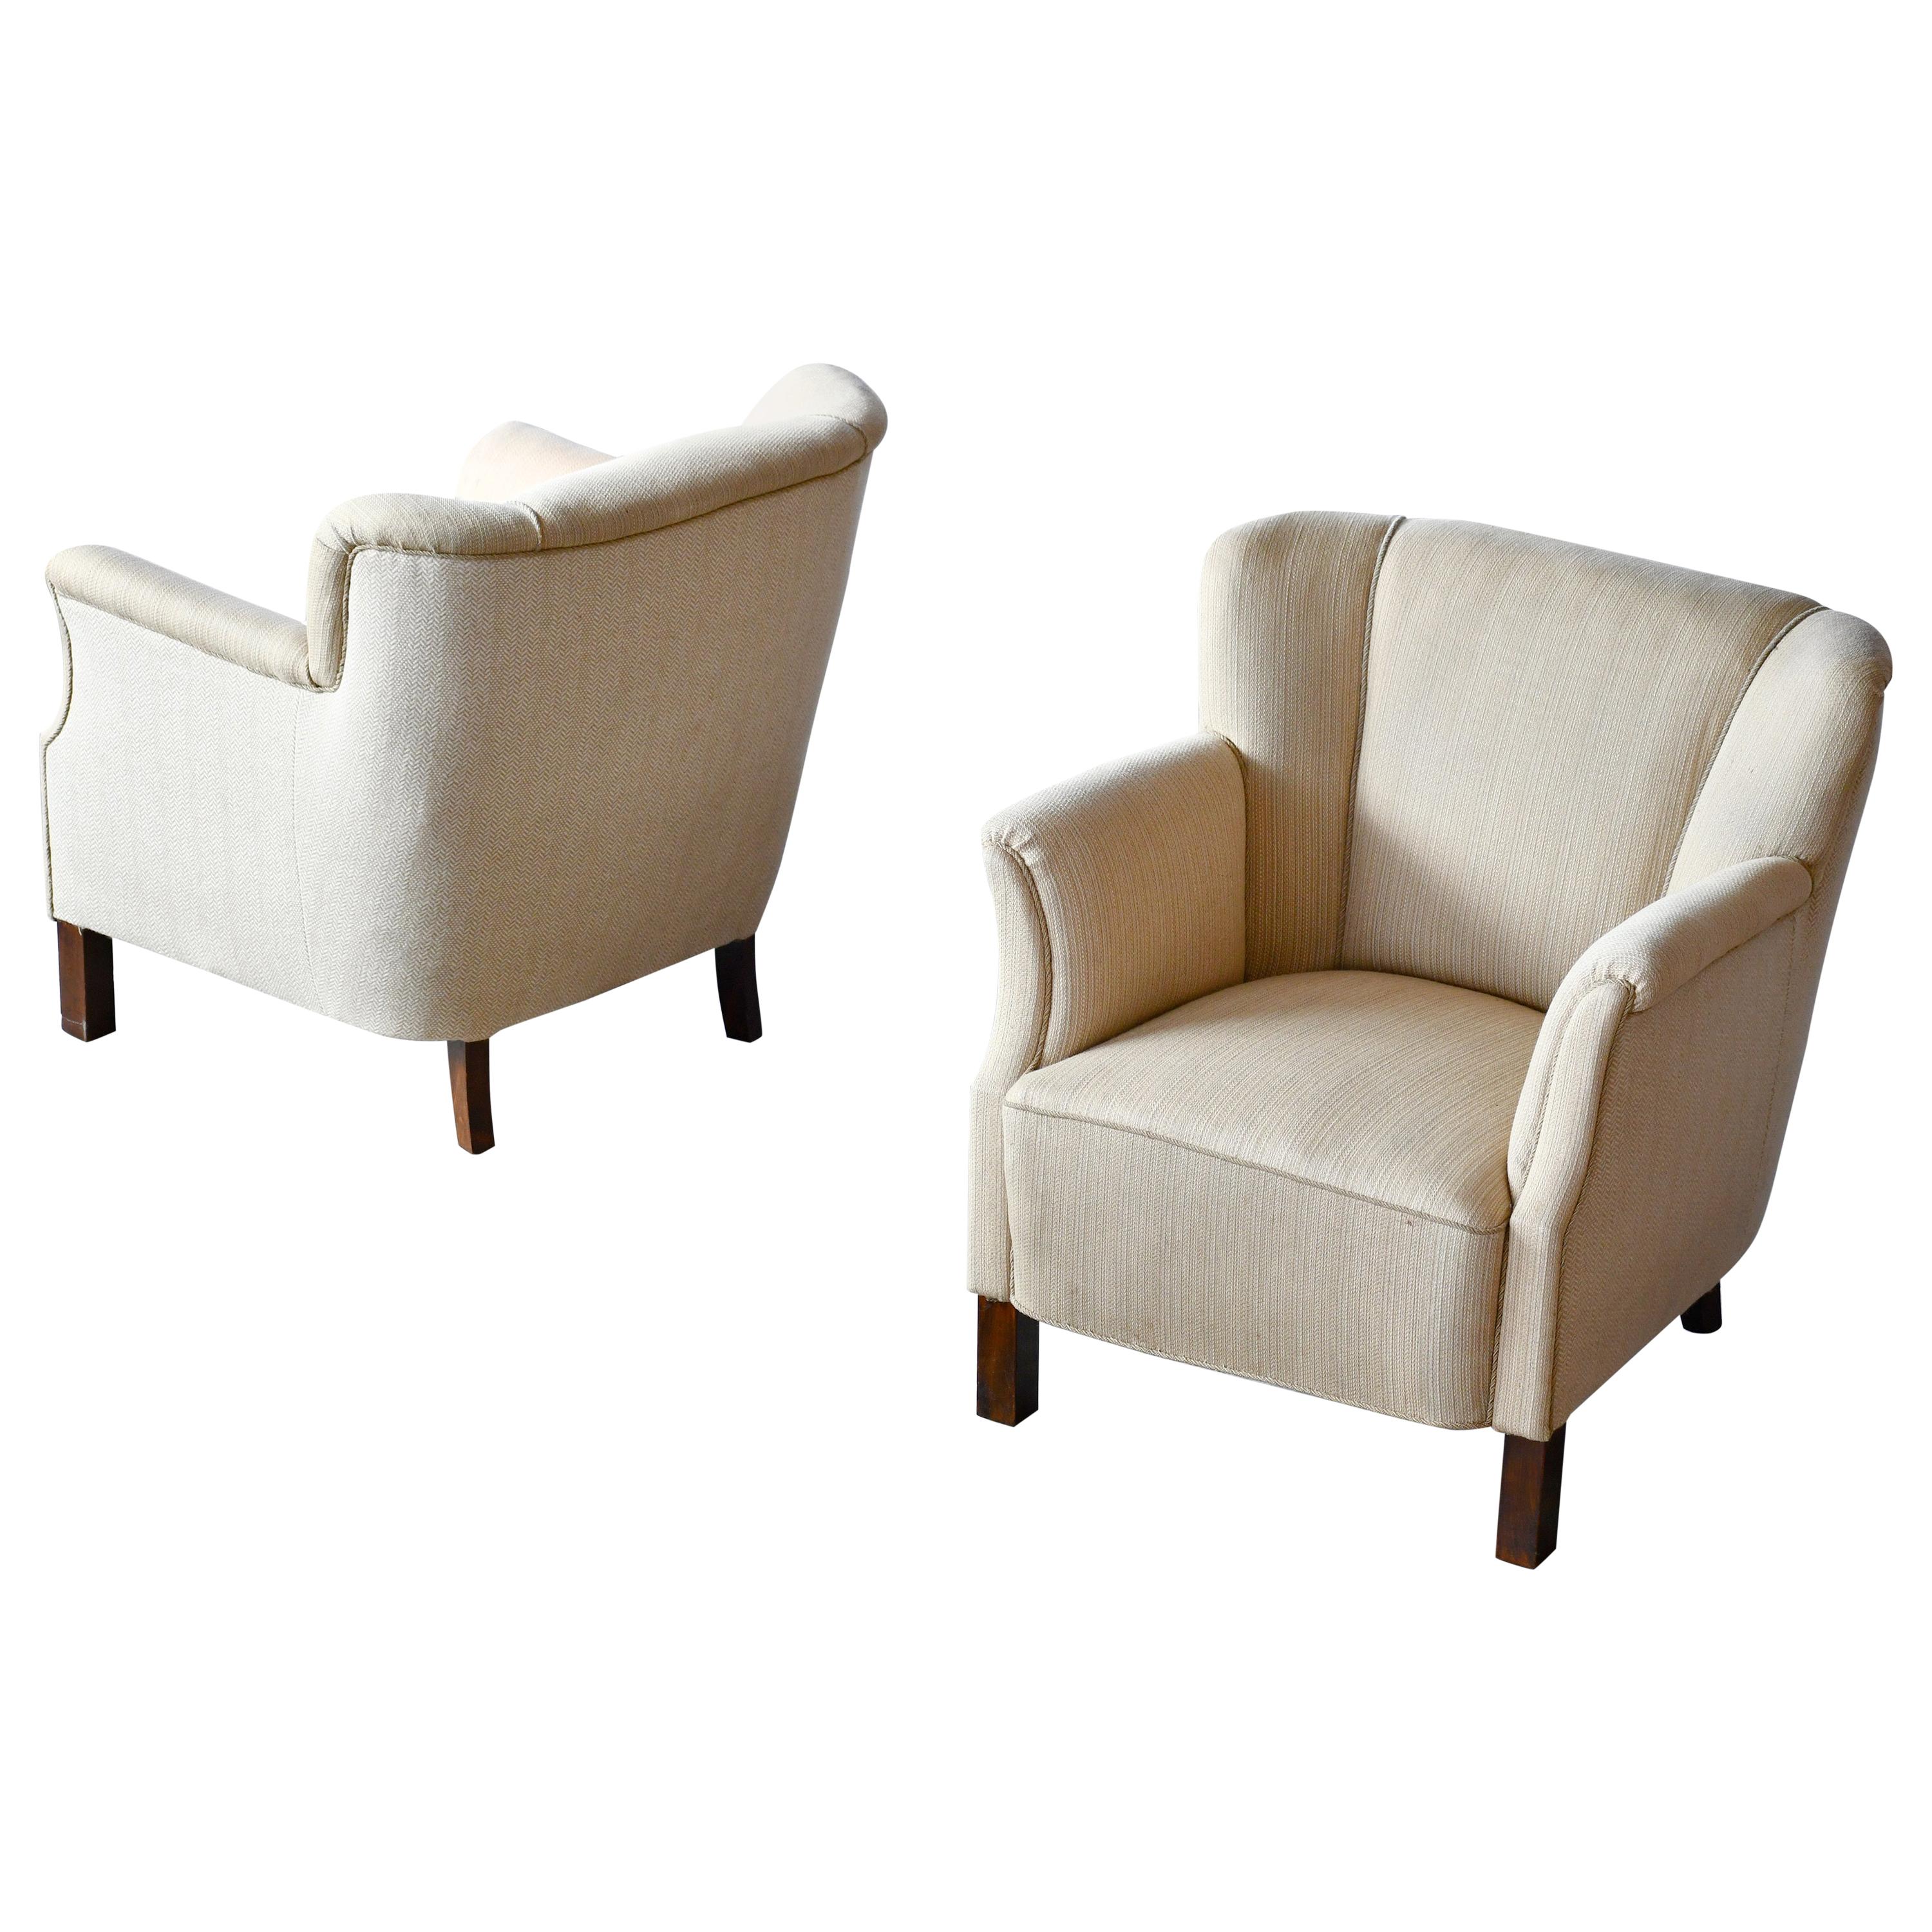 Pair of Danish Mid-Century Fritz Hansen Style Lounge Chairs, ca. 1940-50